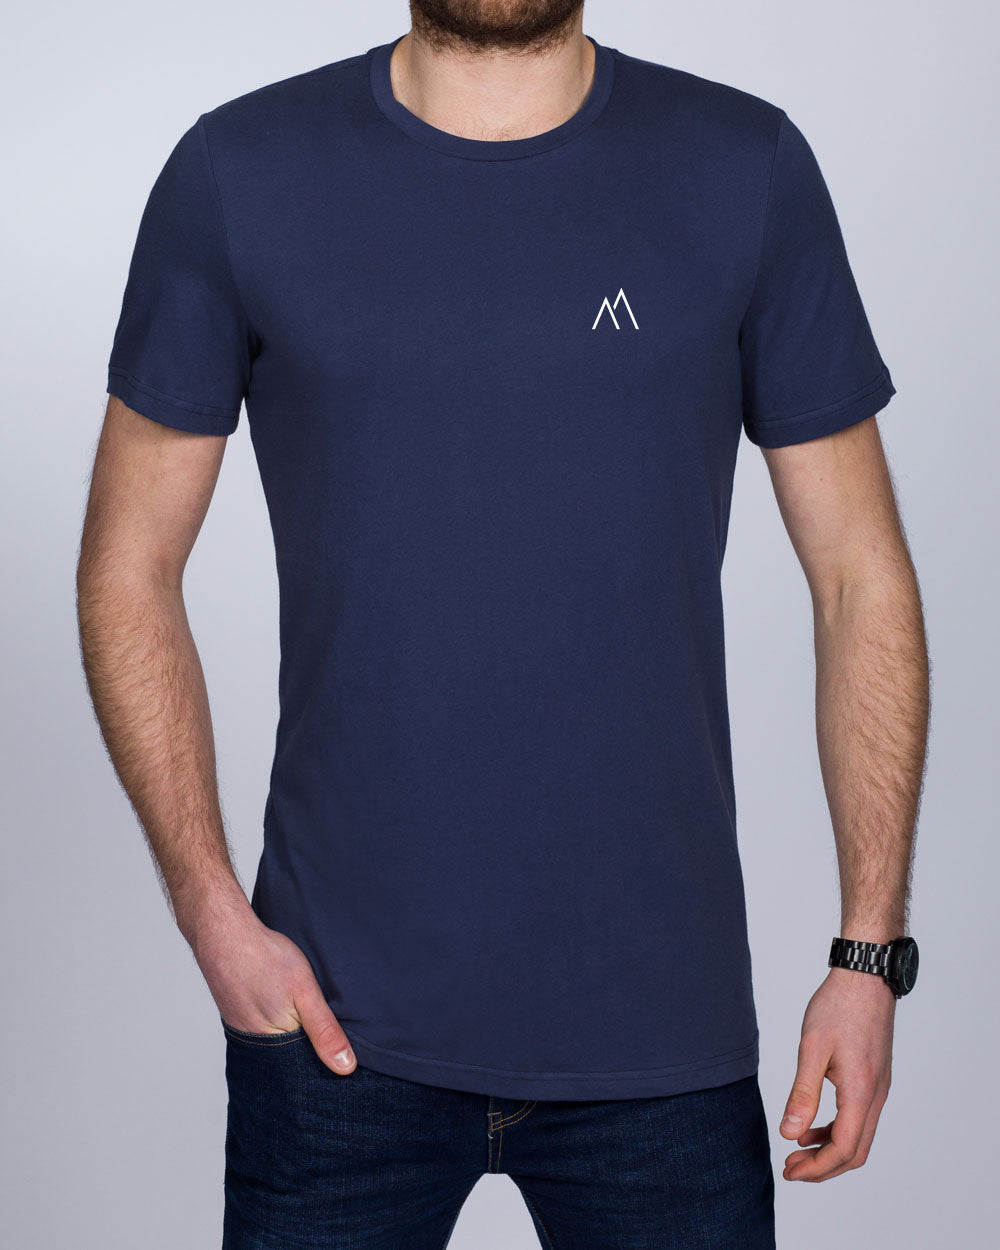 2t Tall T-Shirt (mountains navy)